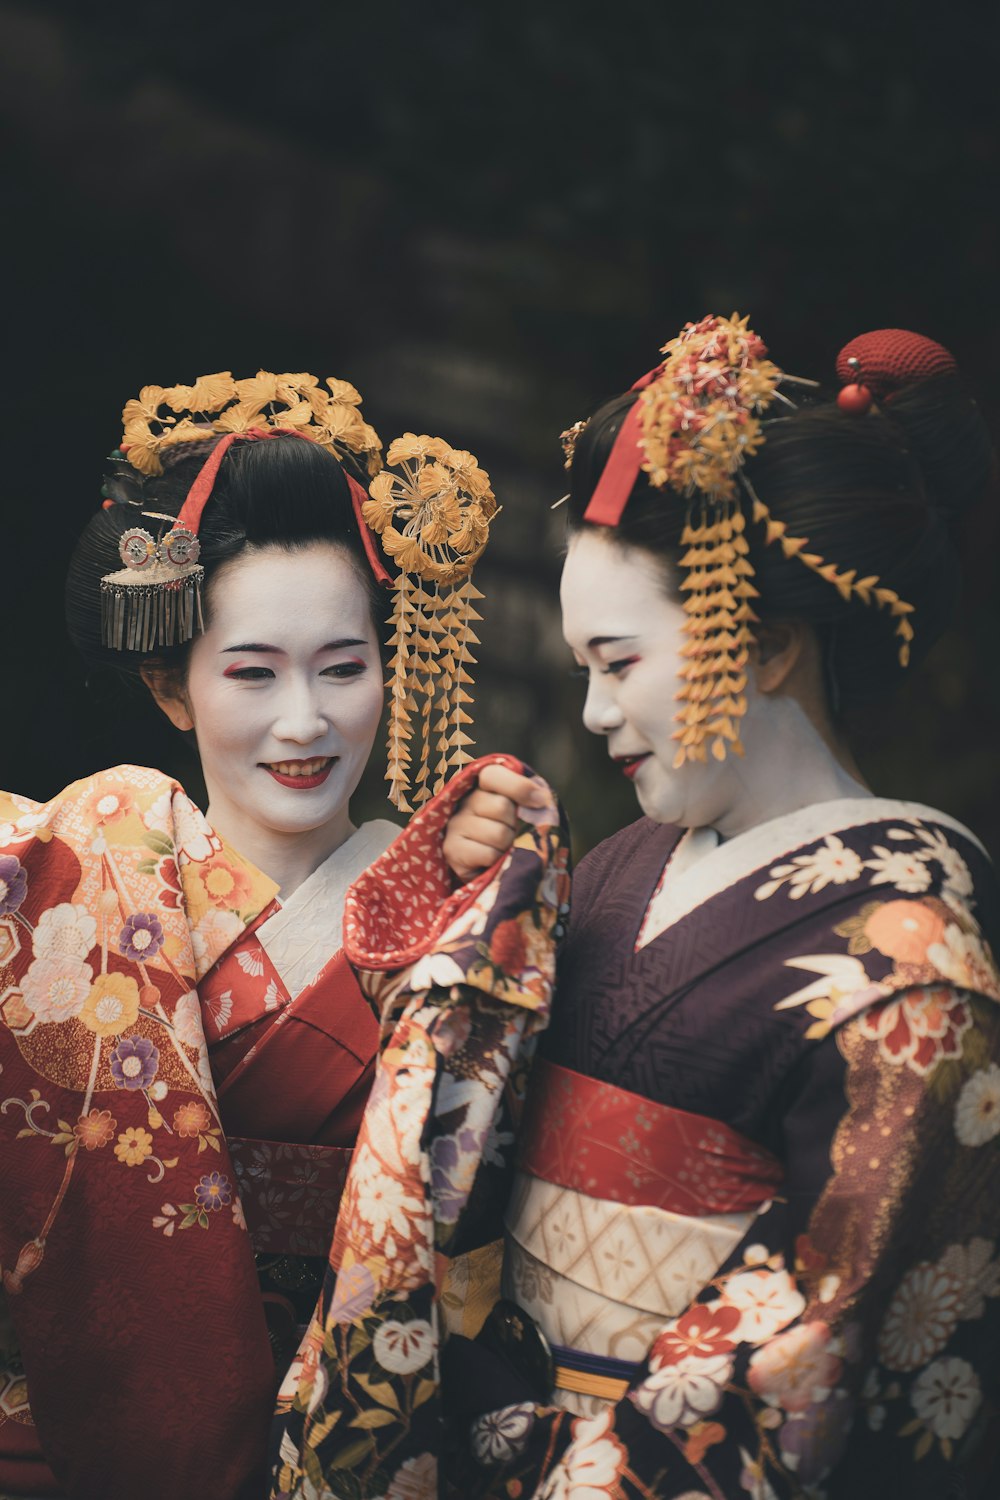 two geisha women dressed in traditional geisha clothing